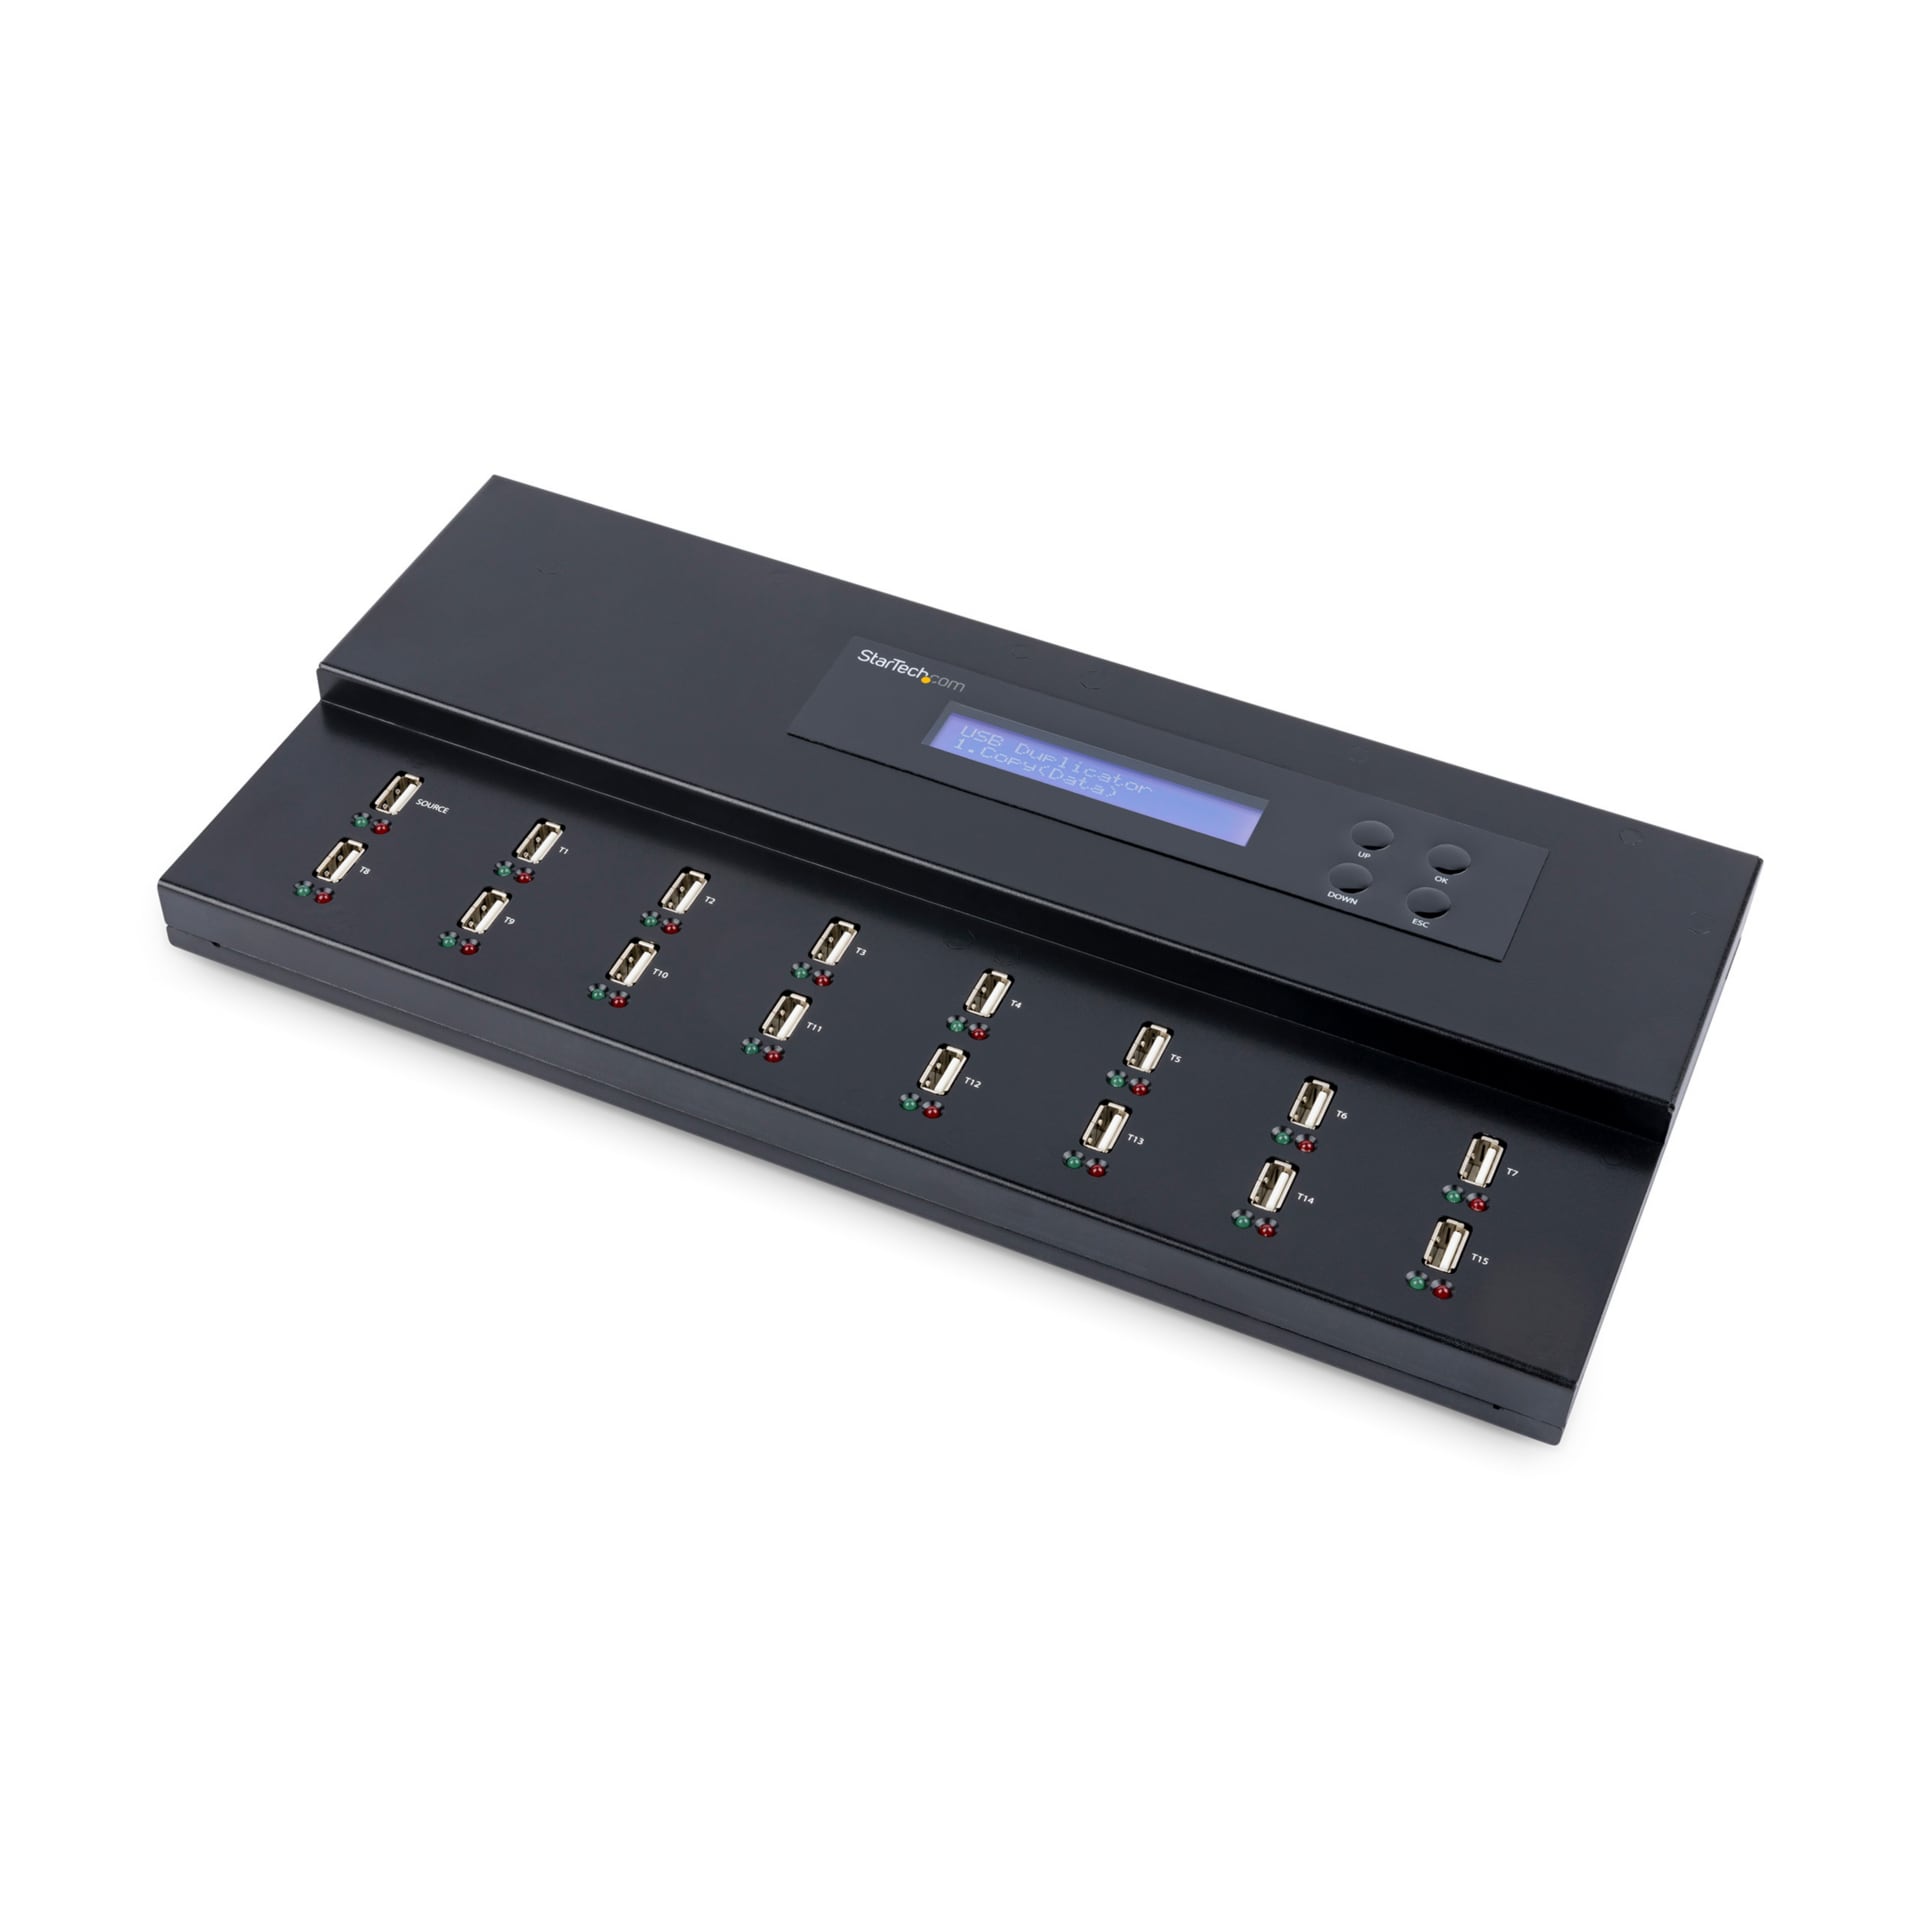 StarTech.com Standalone 1 to 15 USB Thumb Drive Duplicator/Eraser